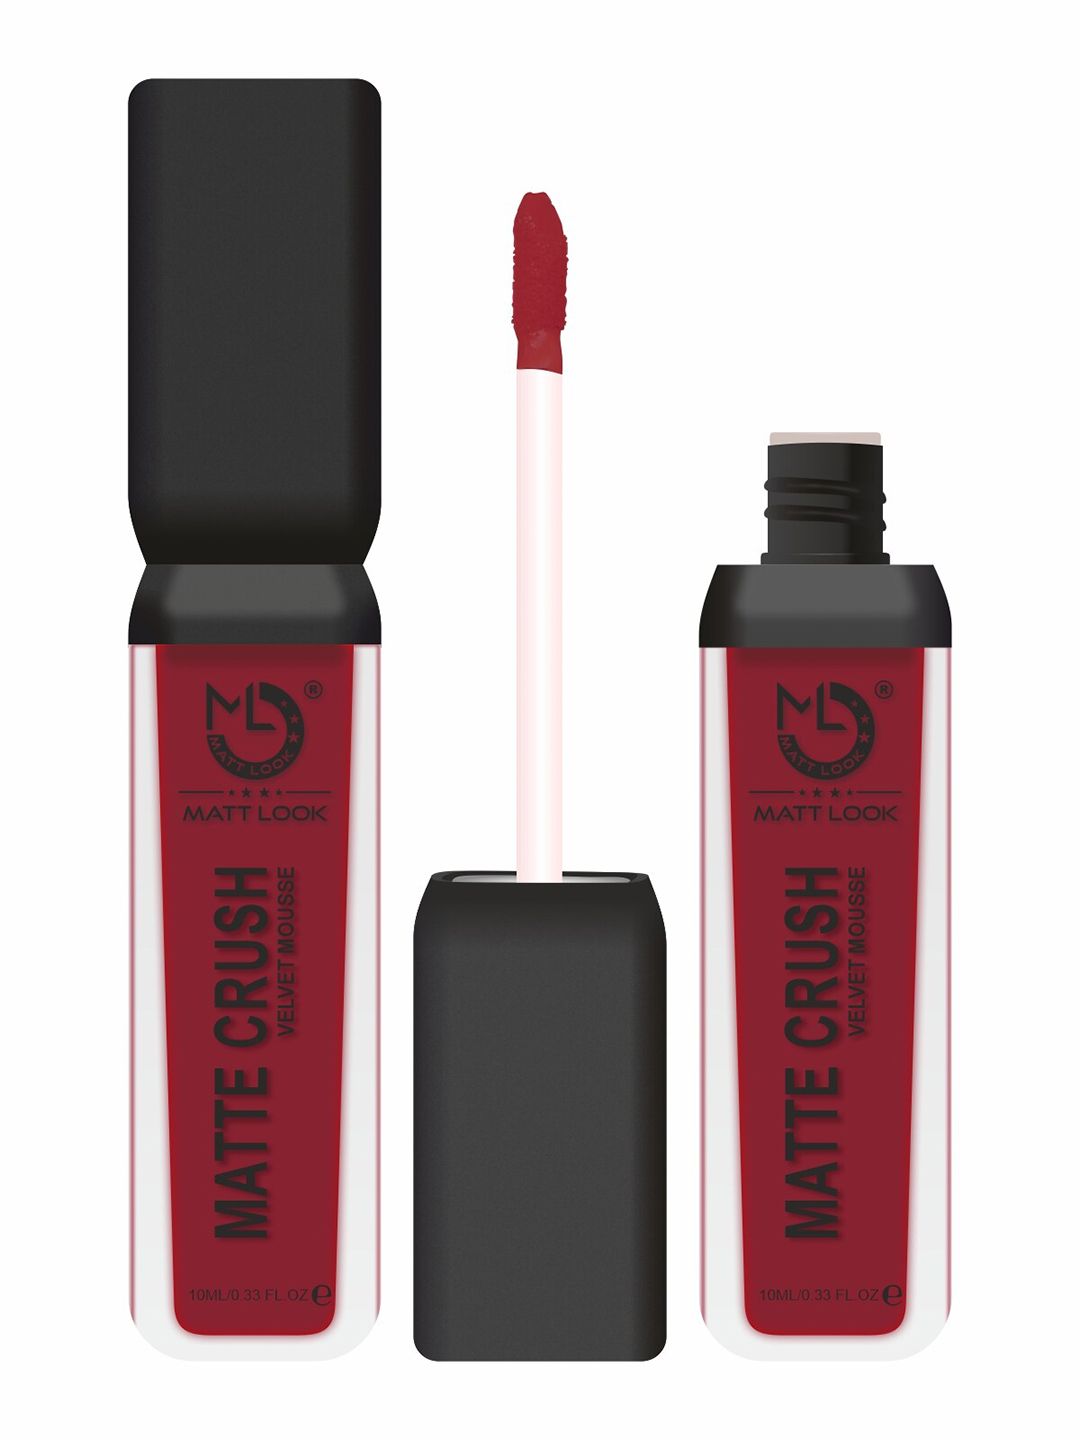 MATTLOOK Matte Crush Velvet Mousse Maroon Lipstick - 10ml (Pack of 2) Price in India